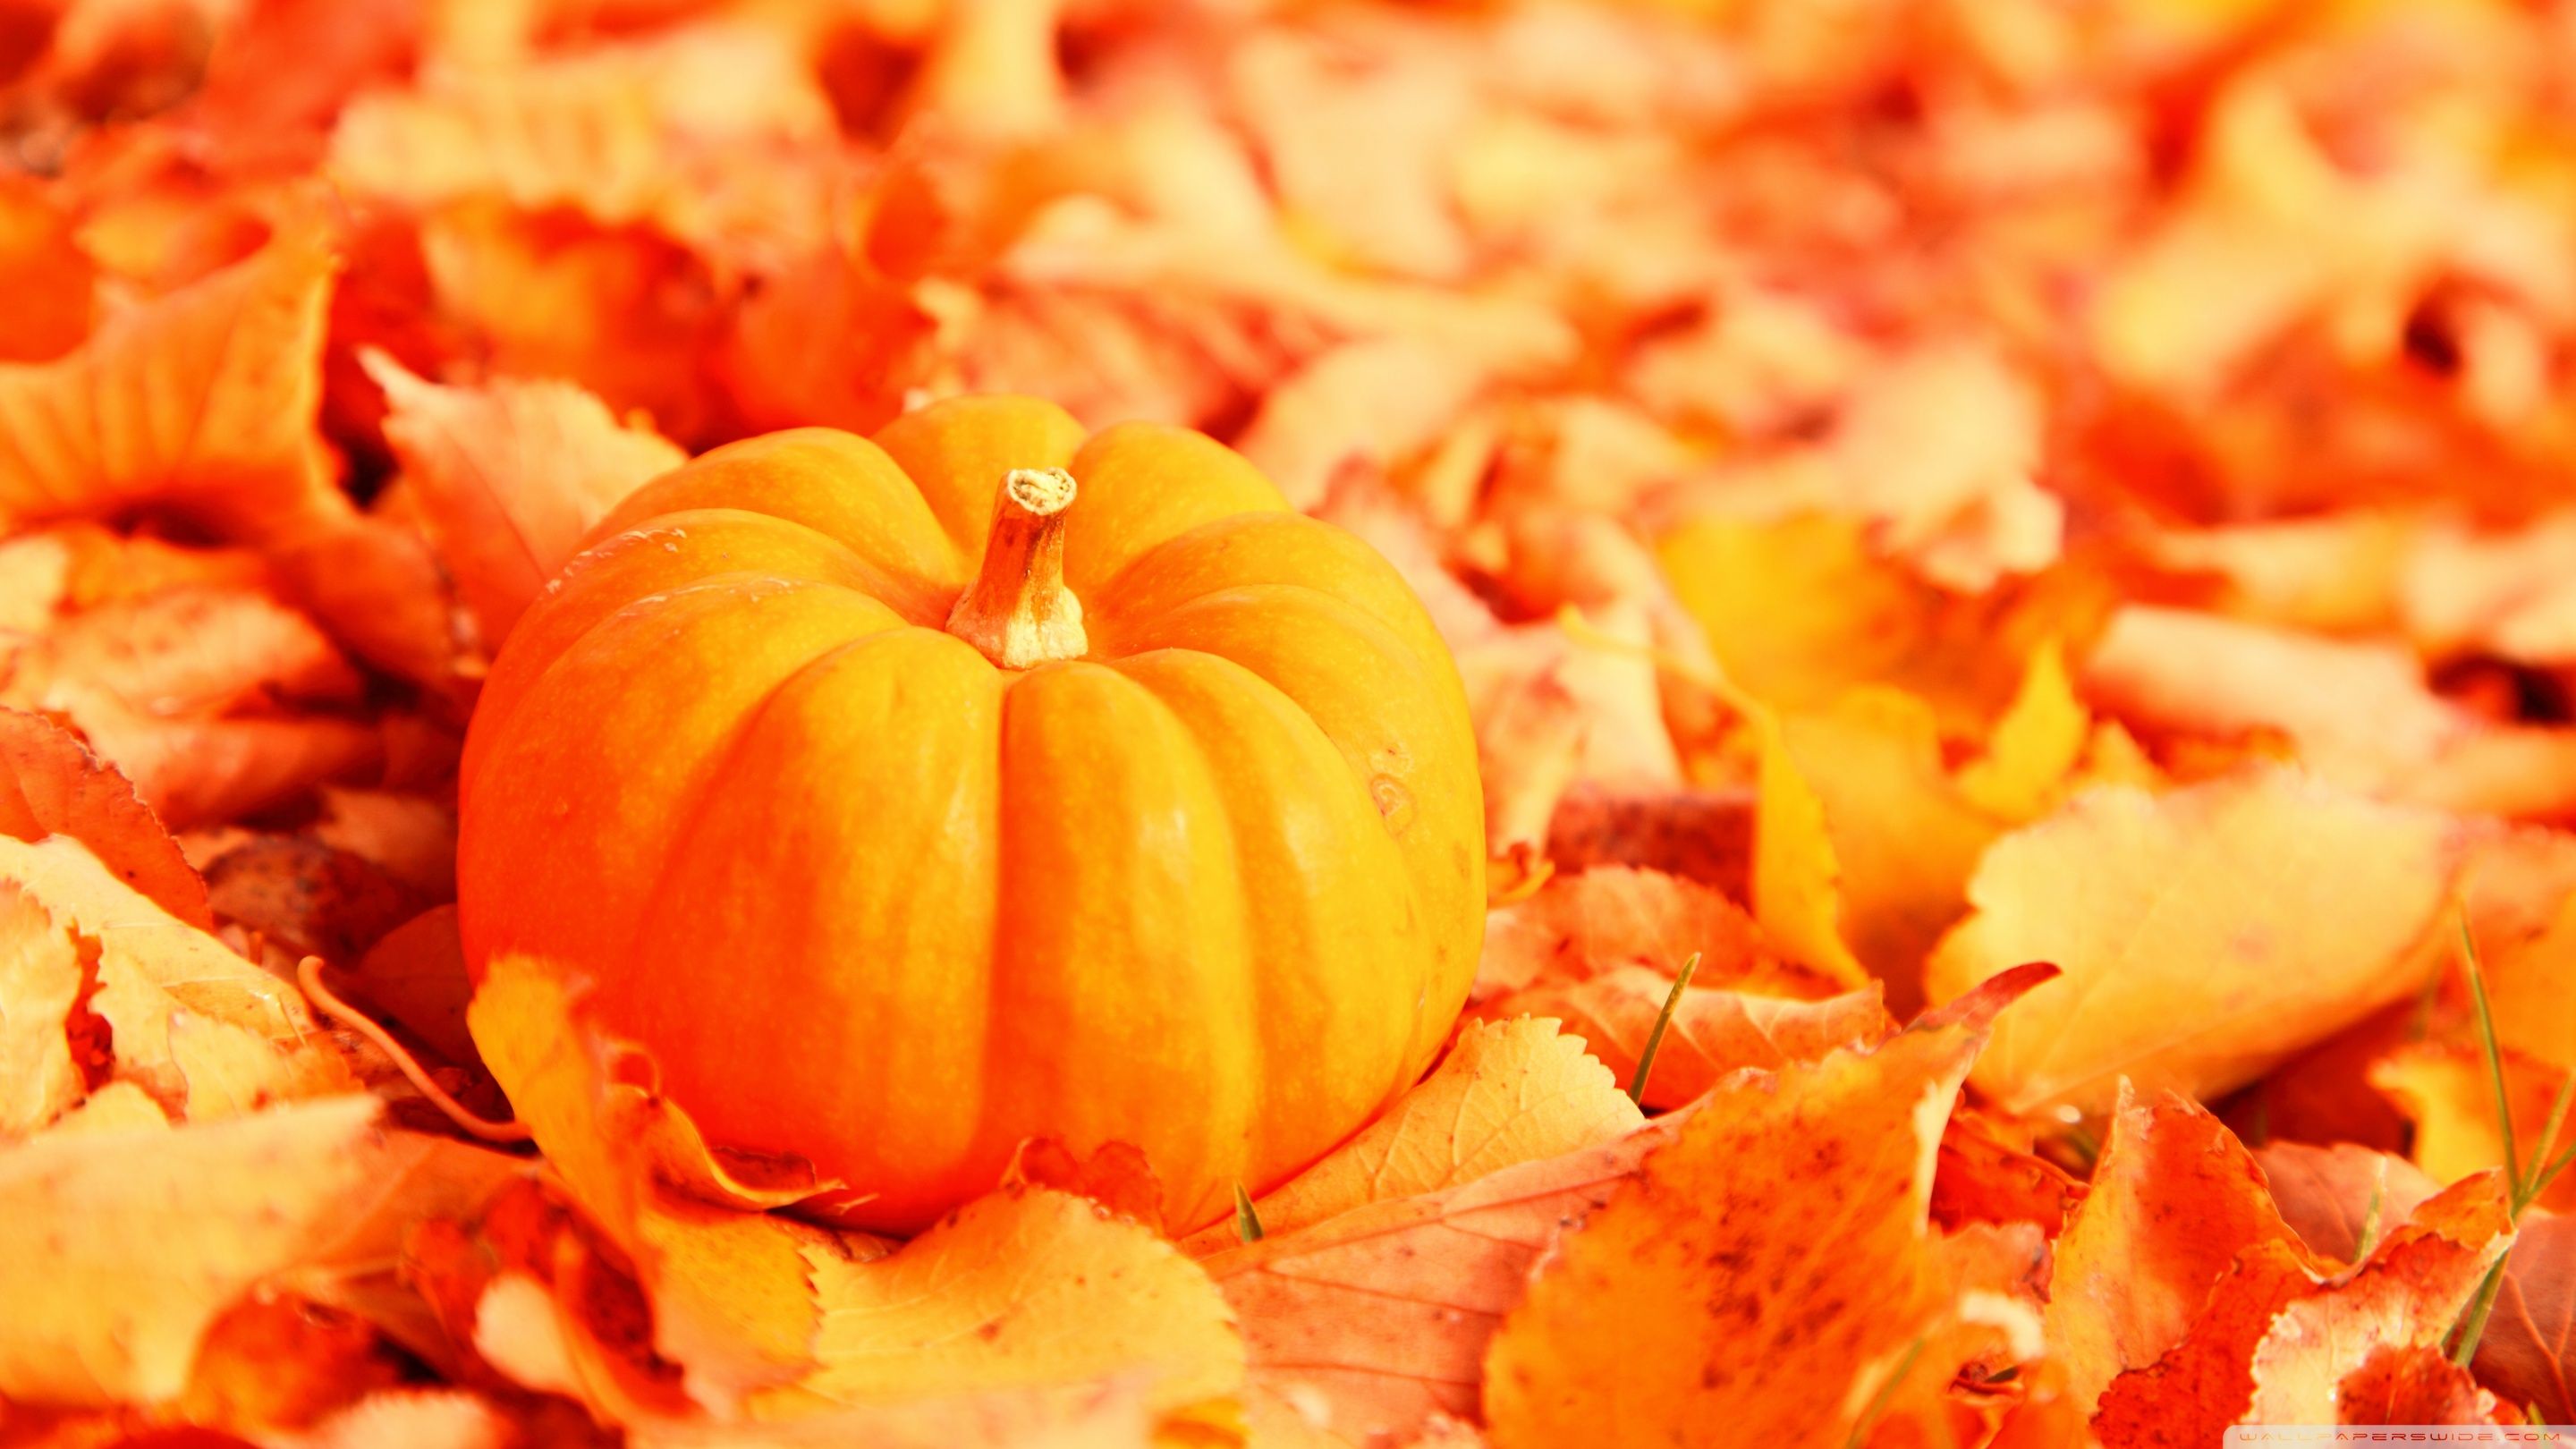 Pumpkin And Autumn Leaves Ultra HD Desktop Background Wallpaper for 4K UHD TV, Tablet